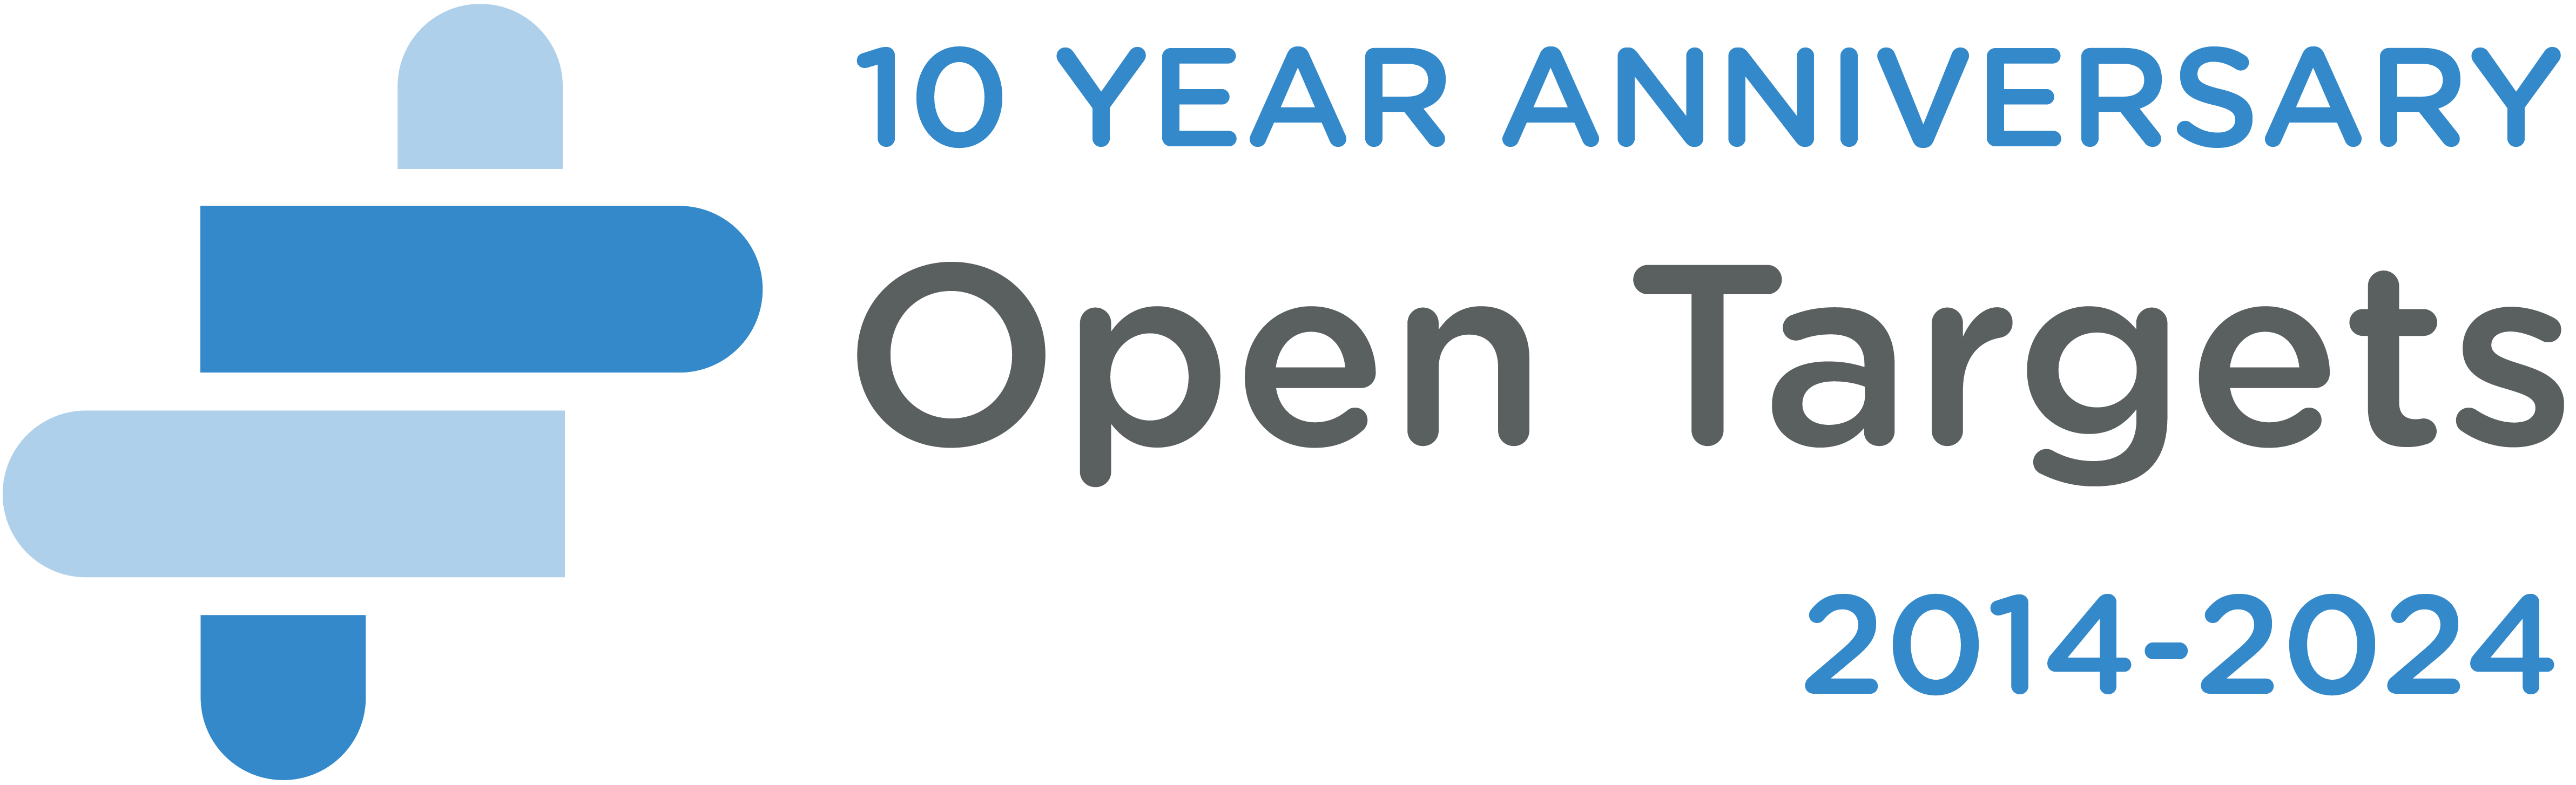 Ten year anniversary logo, Open Targets helix logo and wordmark